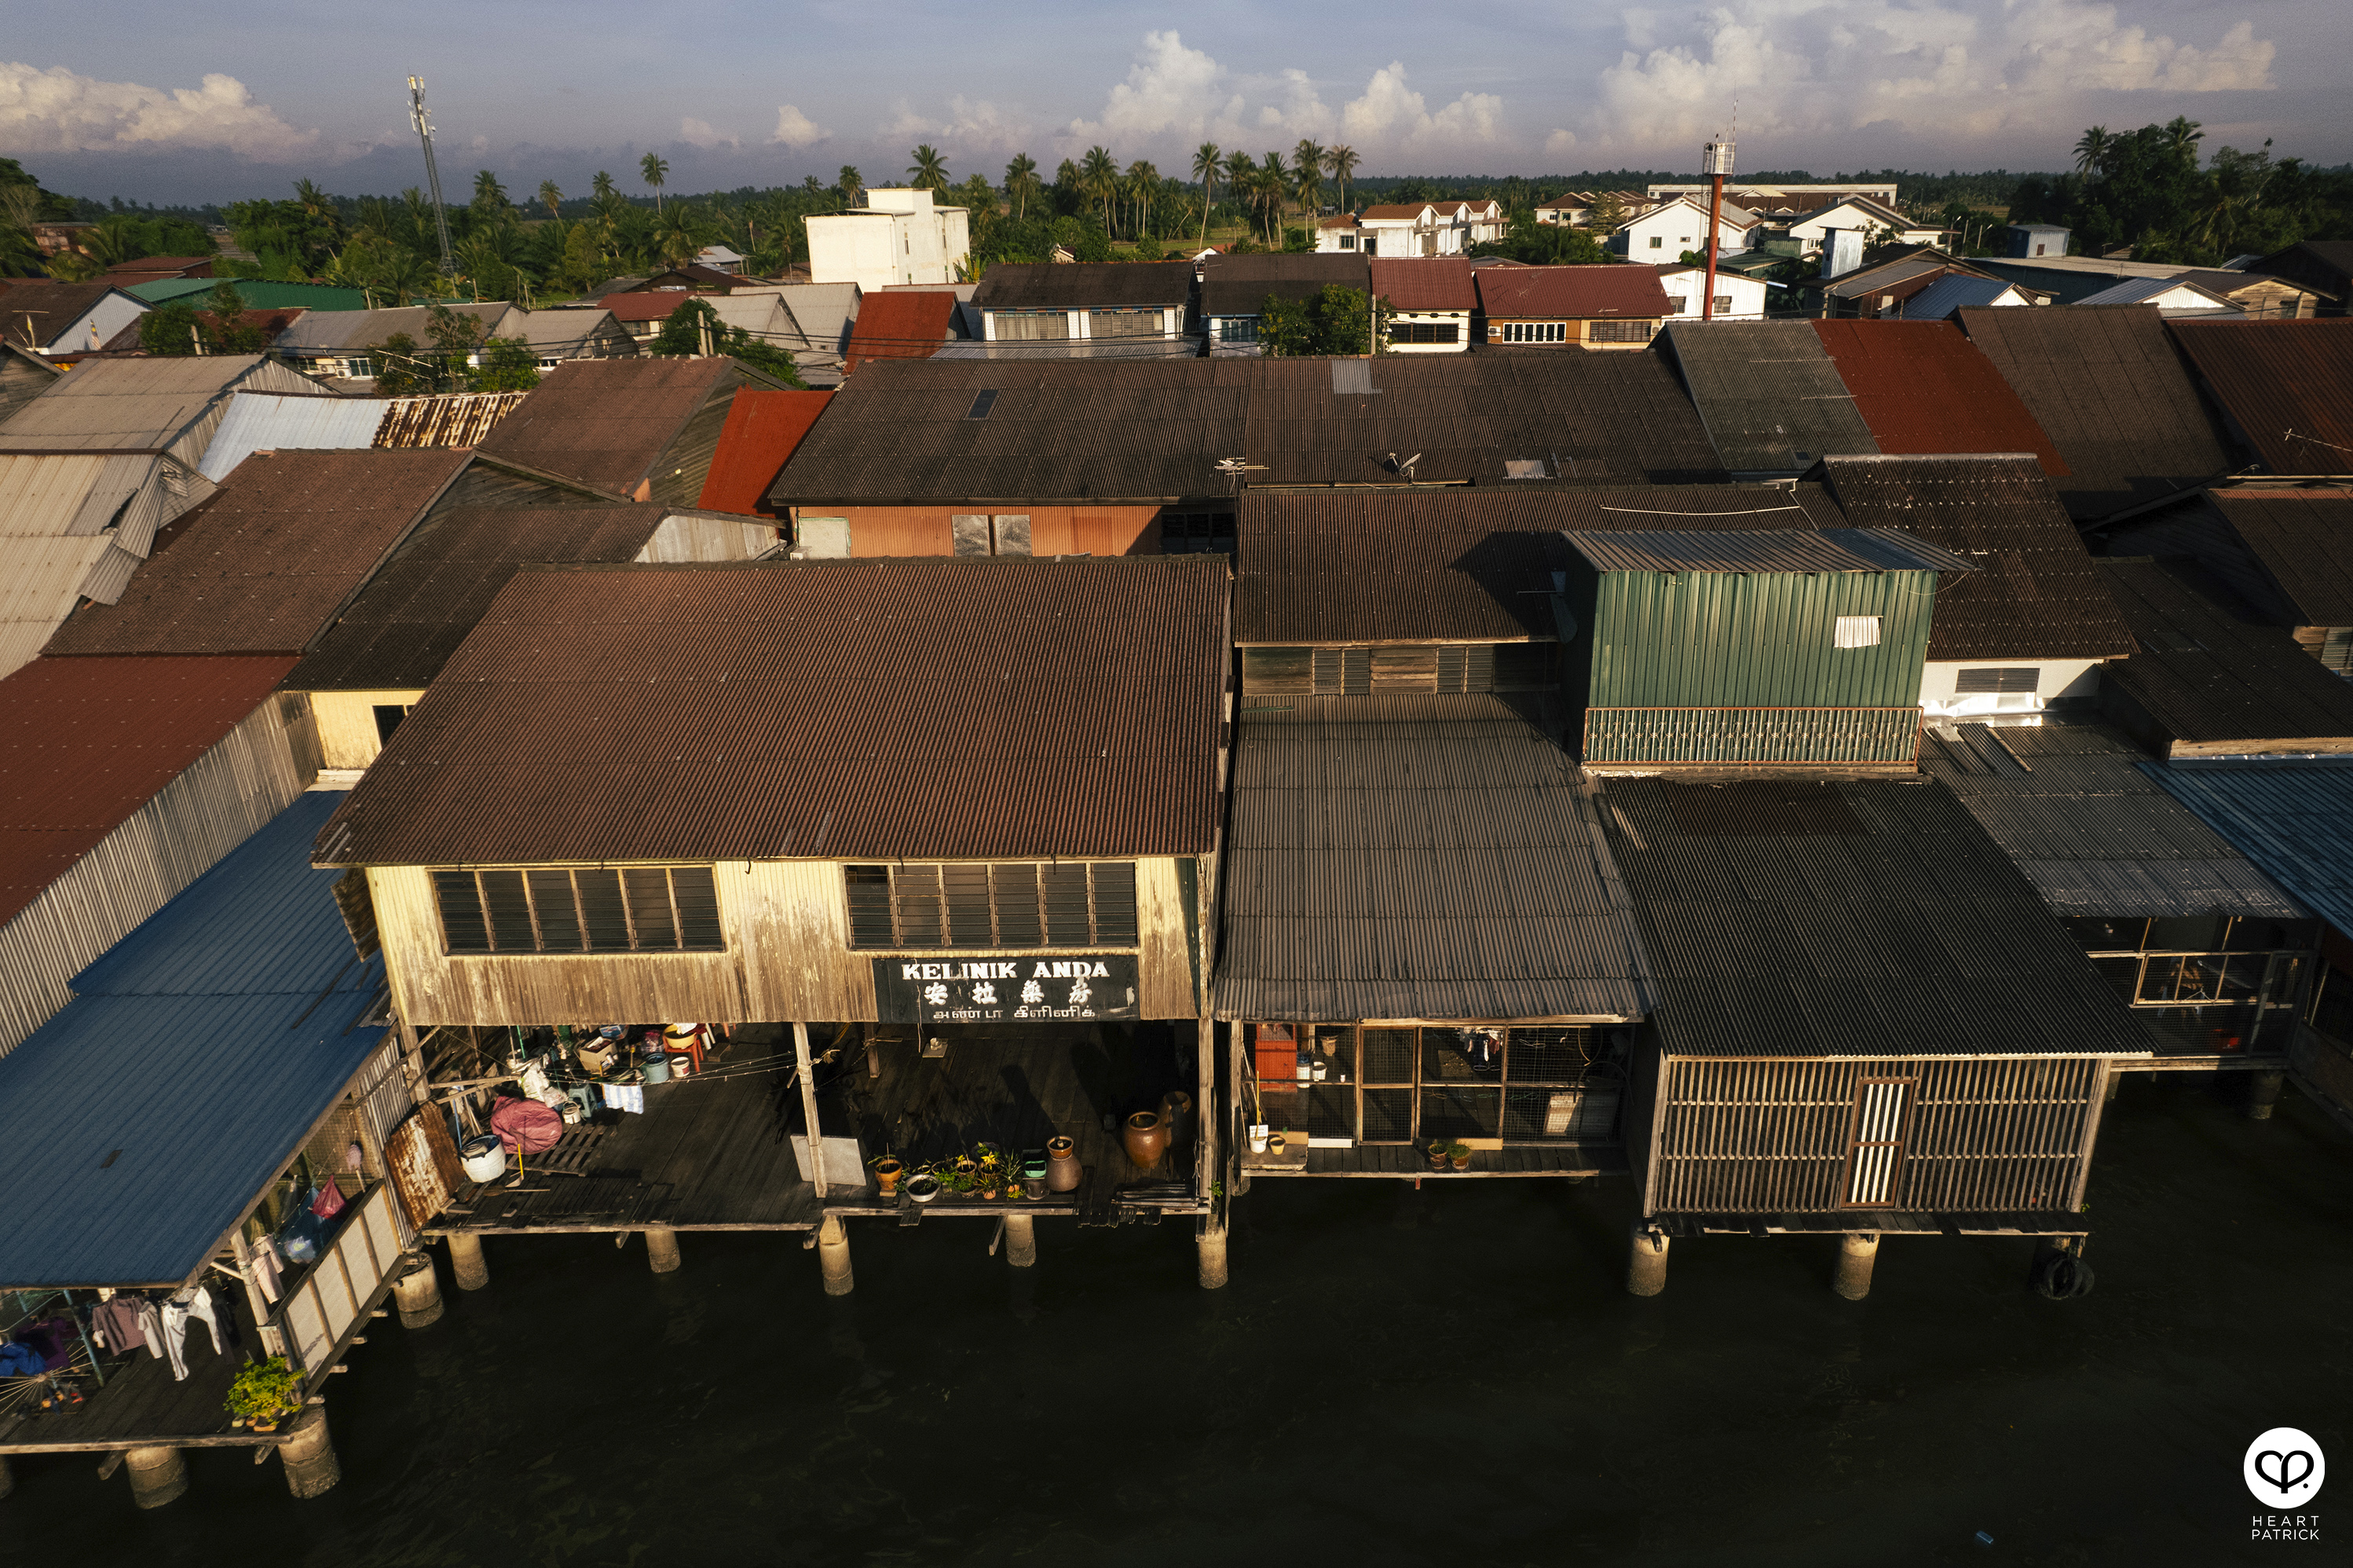 heartpatrick kuala kurau perak malaysia heritage fishing village aerial photography